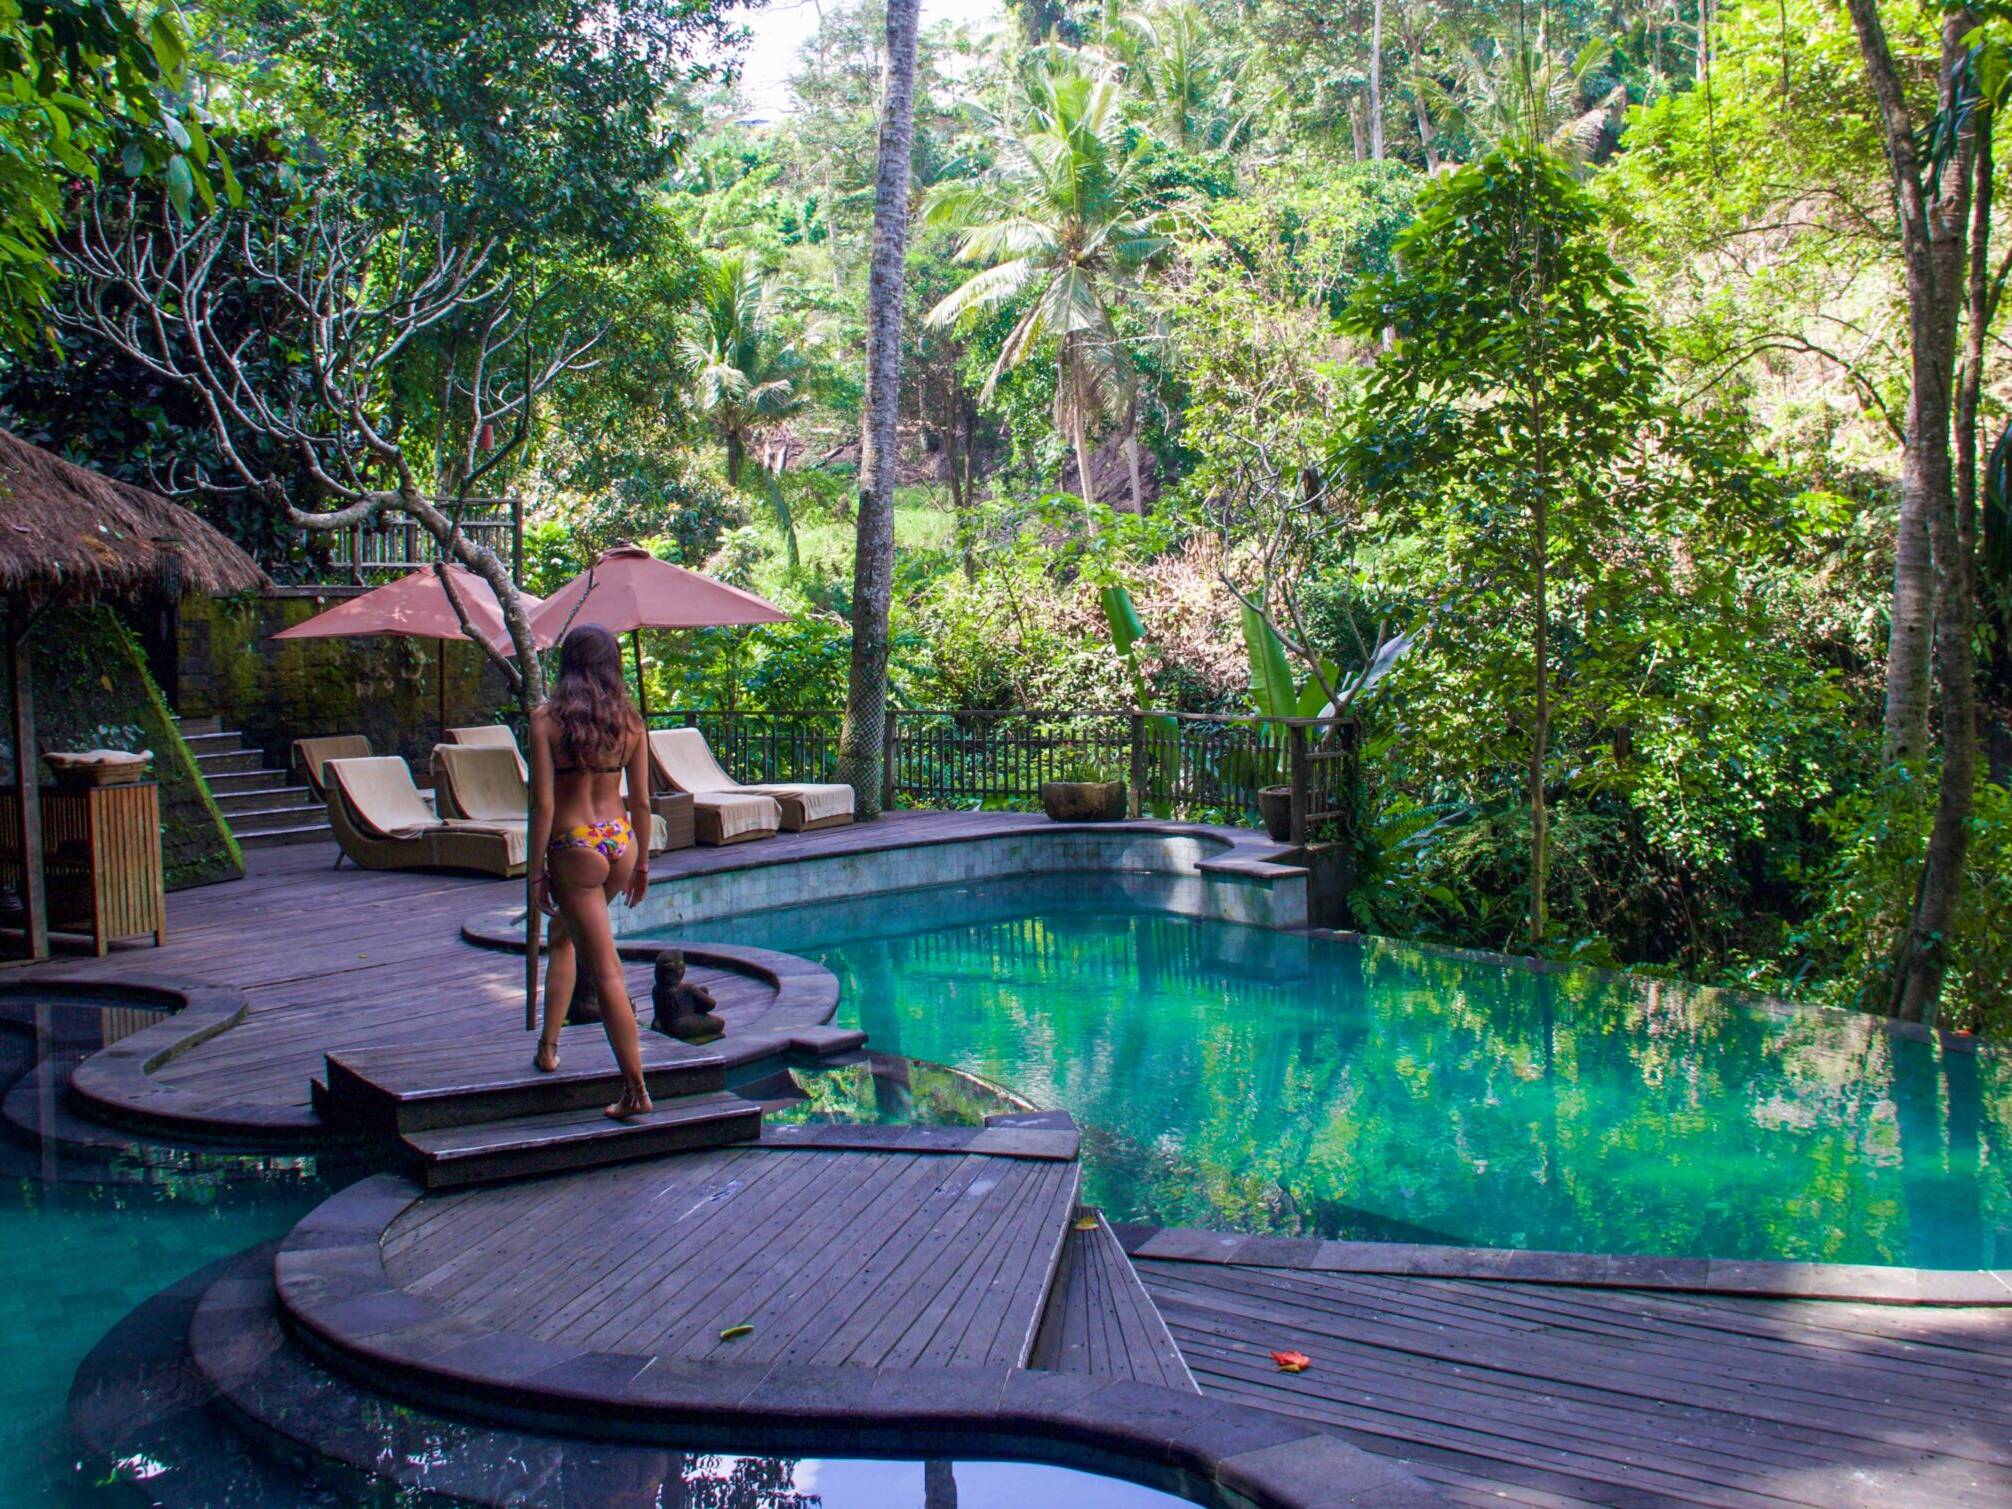 Infinity pool at Svarga Loka resort in Ubud